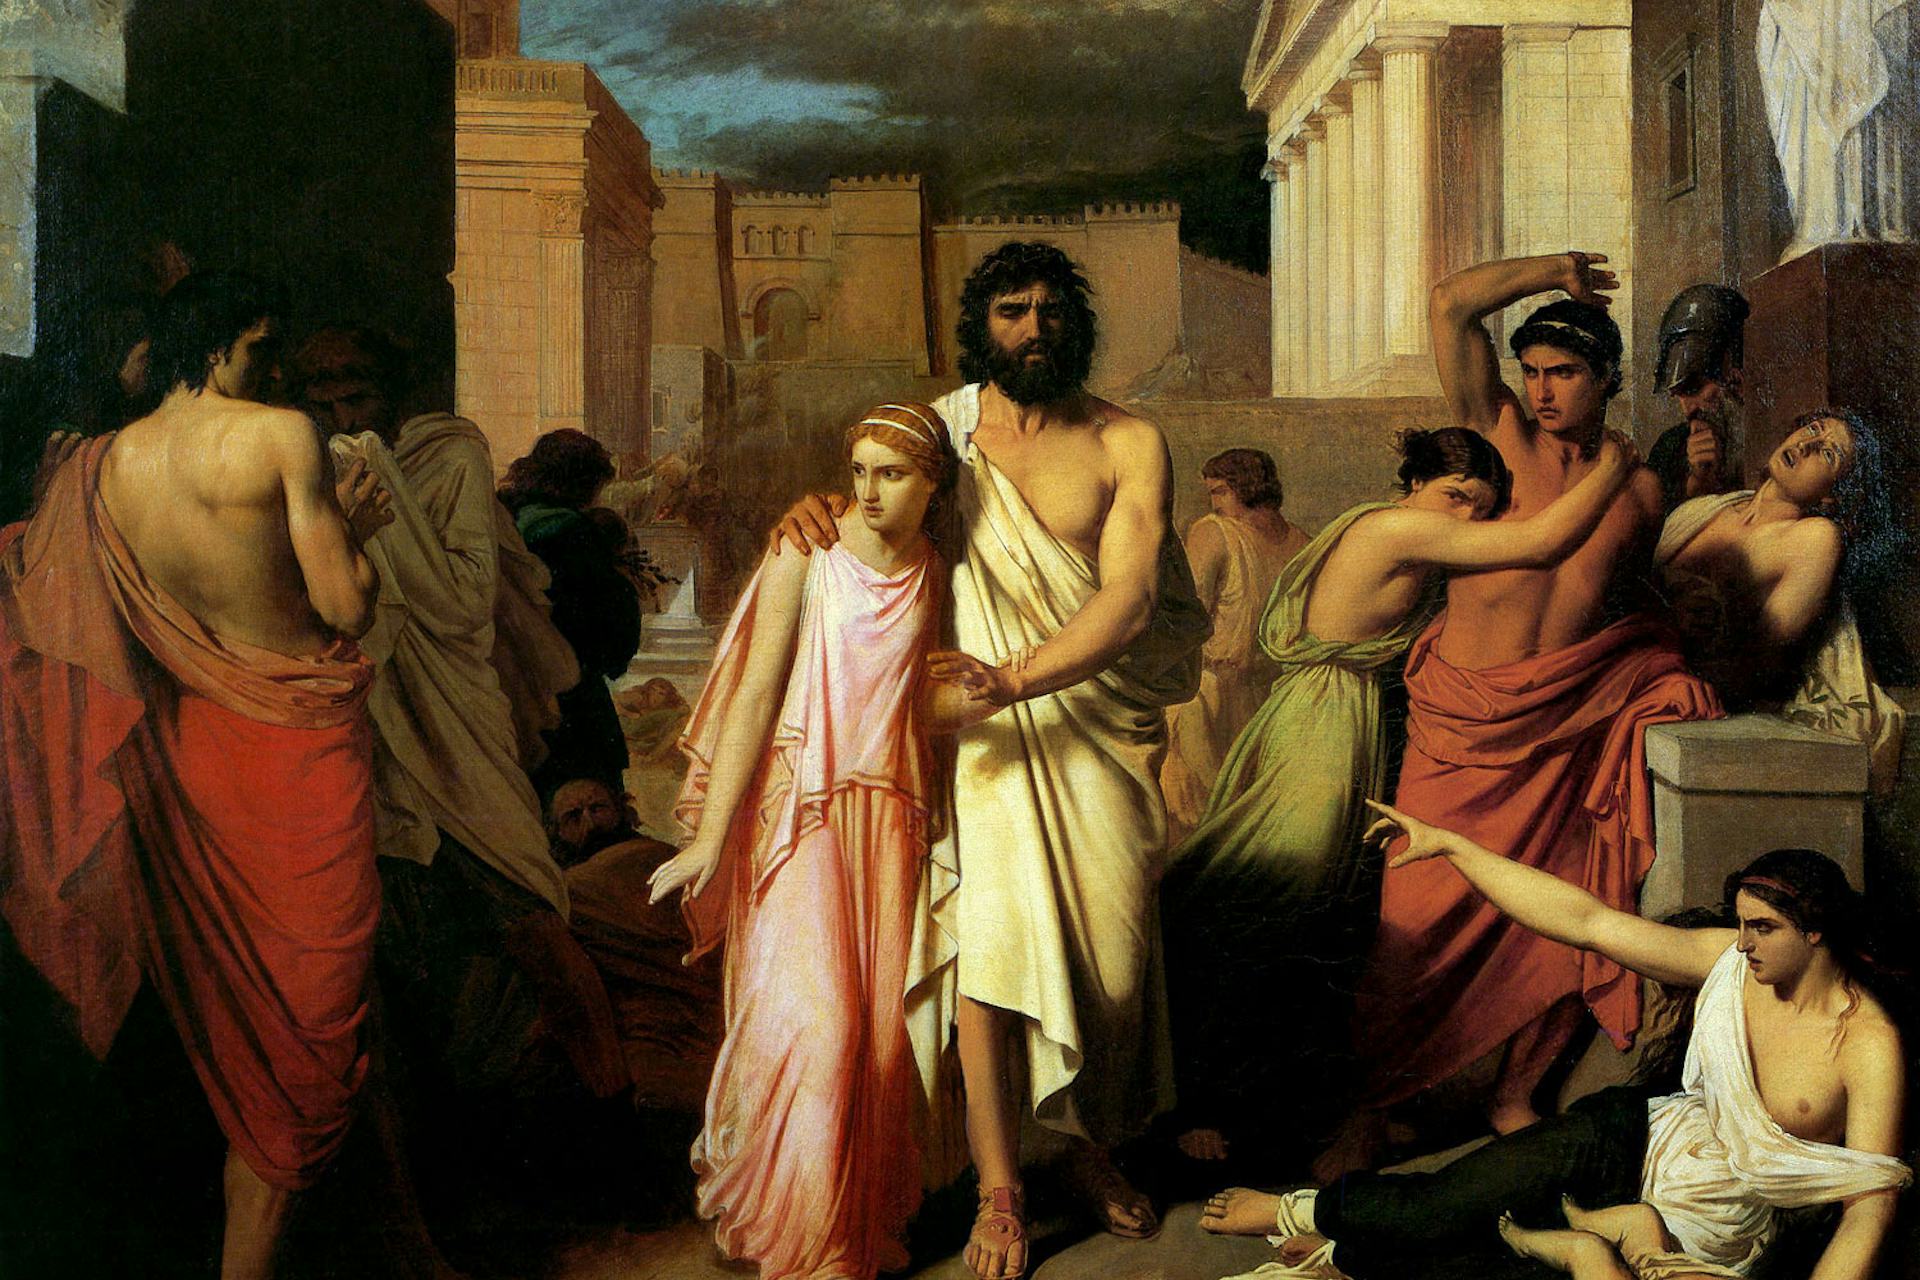 Oedipus and Antigone by Charles Jalabert